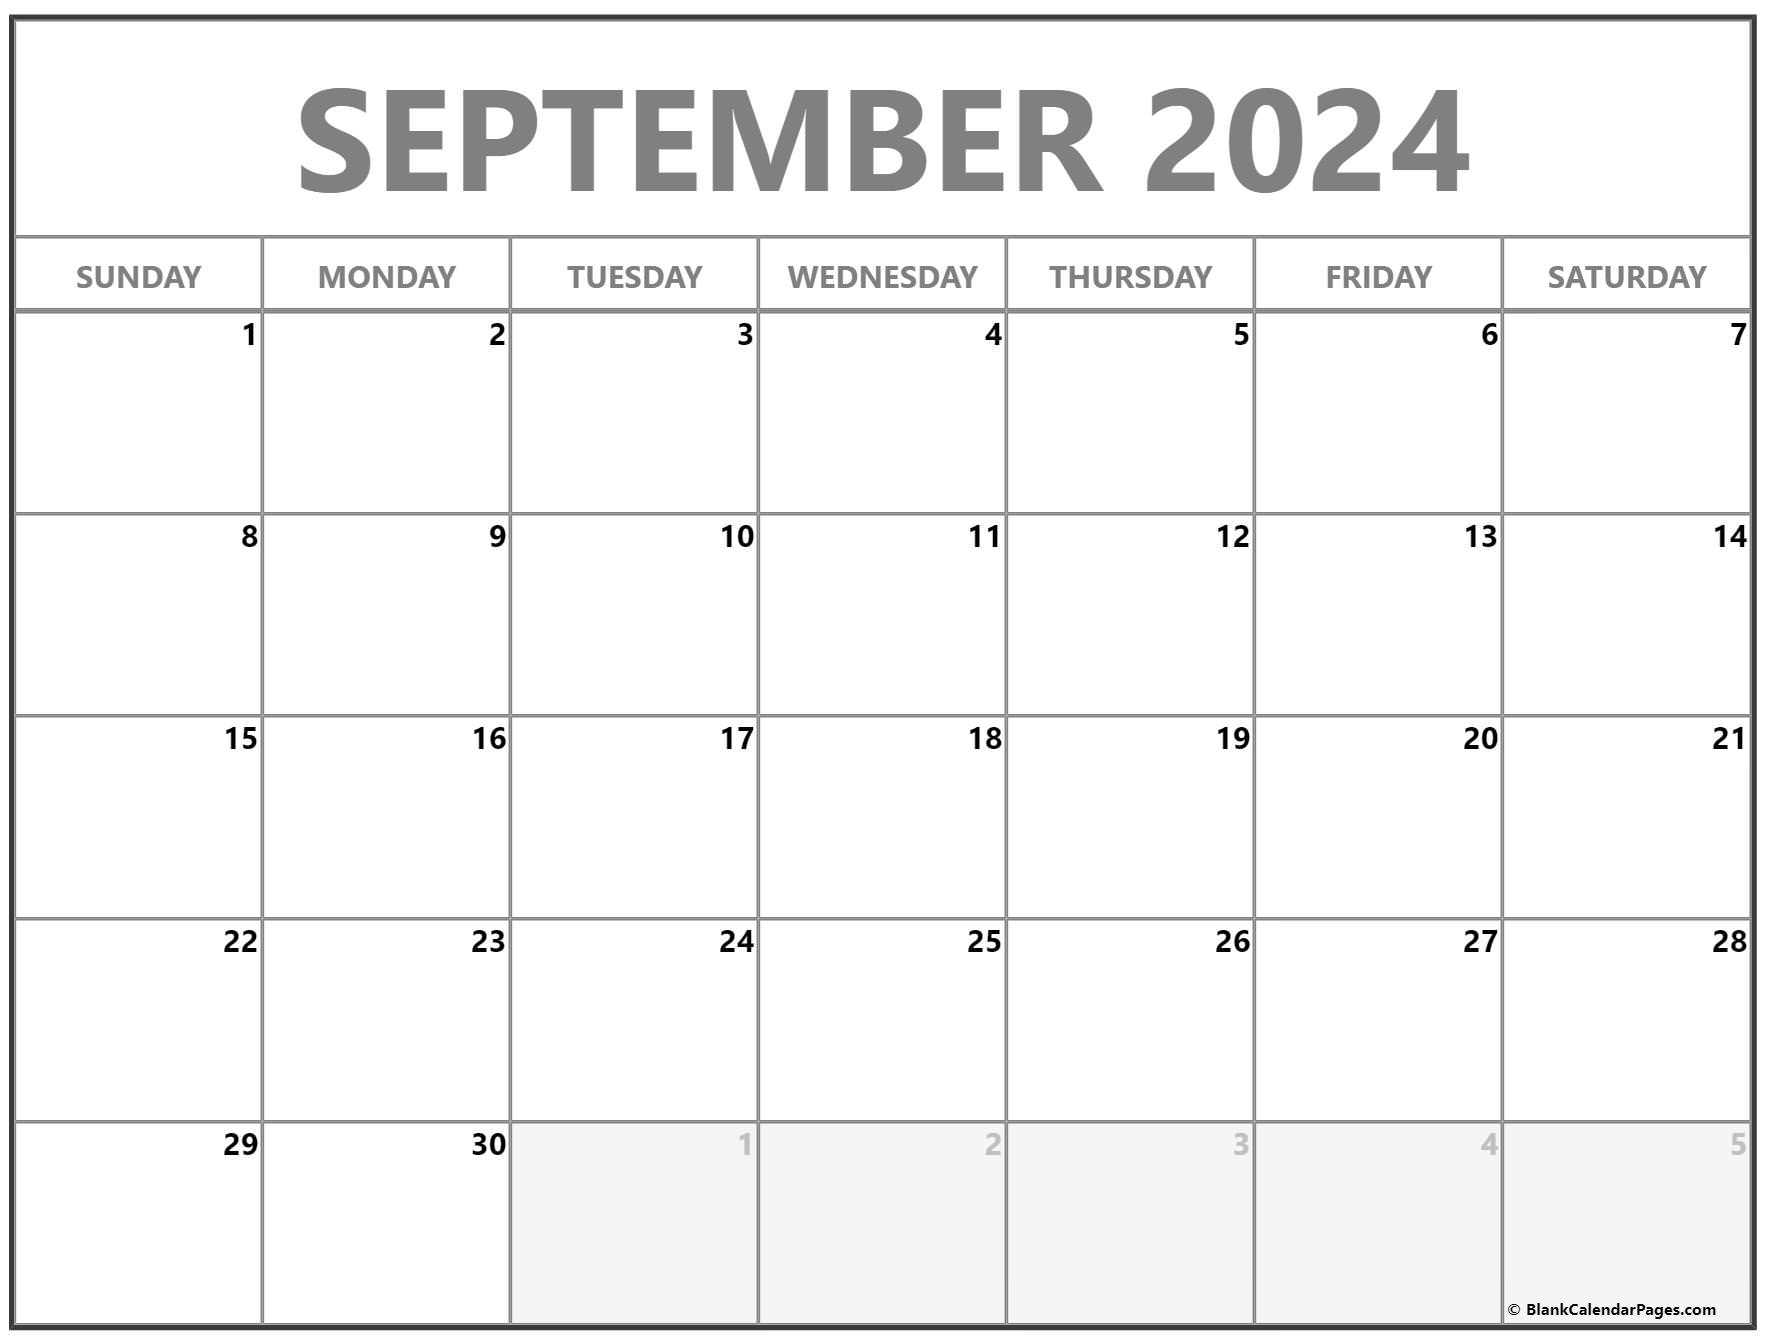 September 2024 calendar | free printable calendar